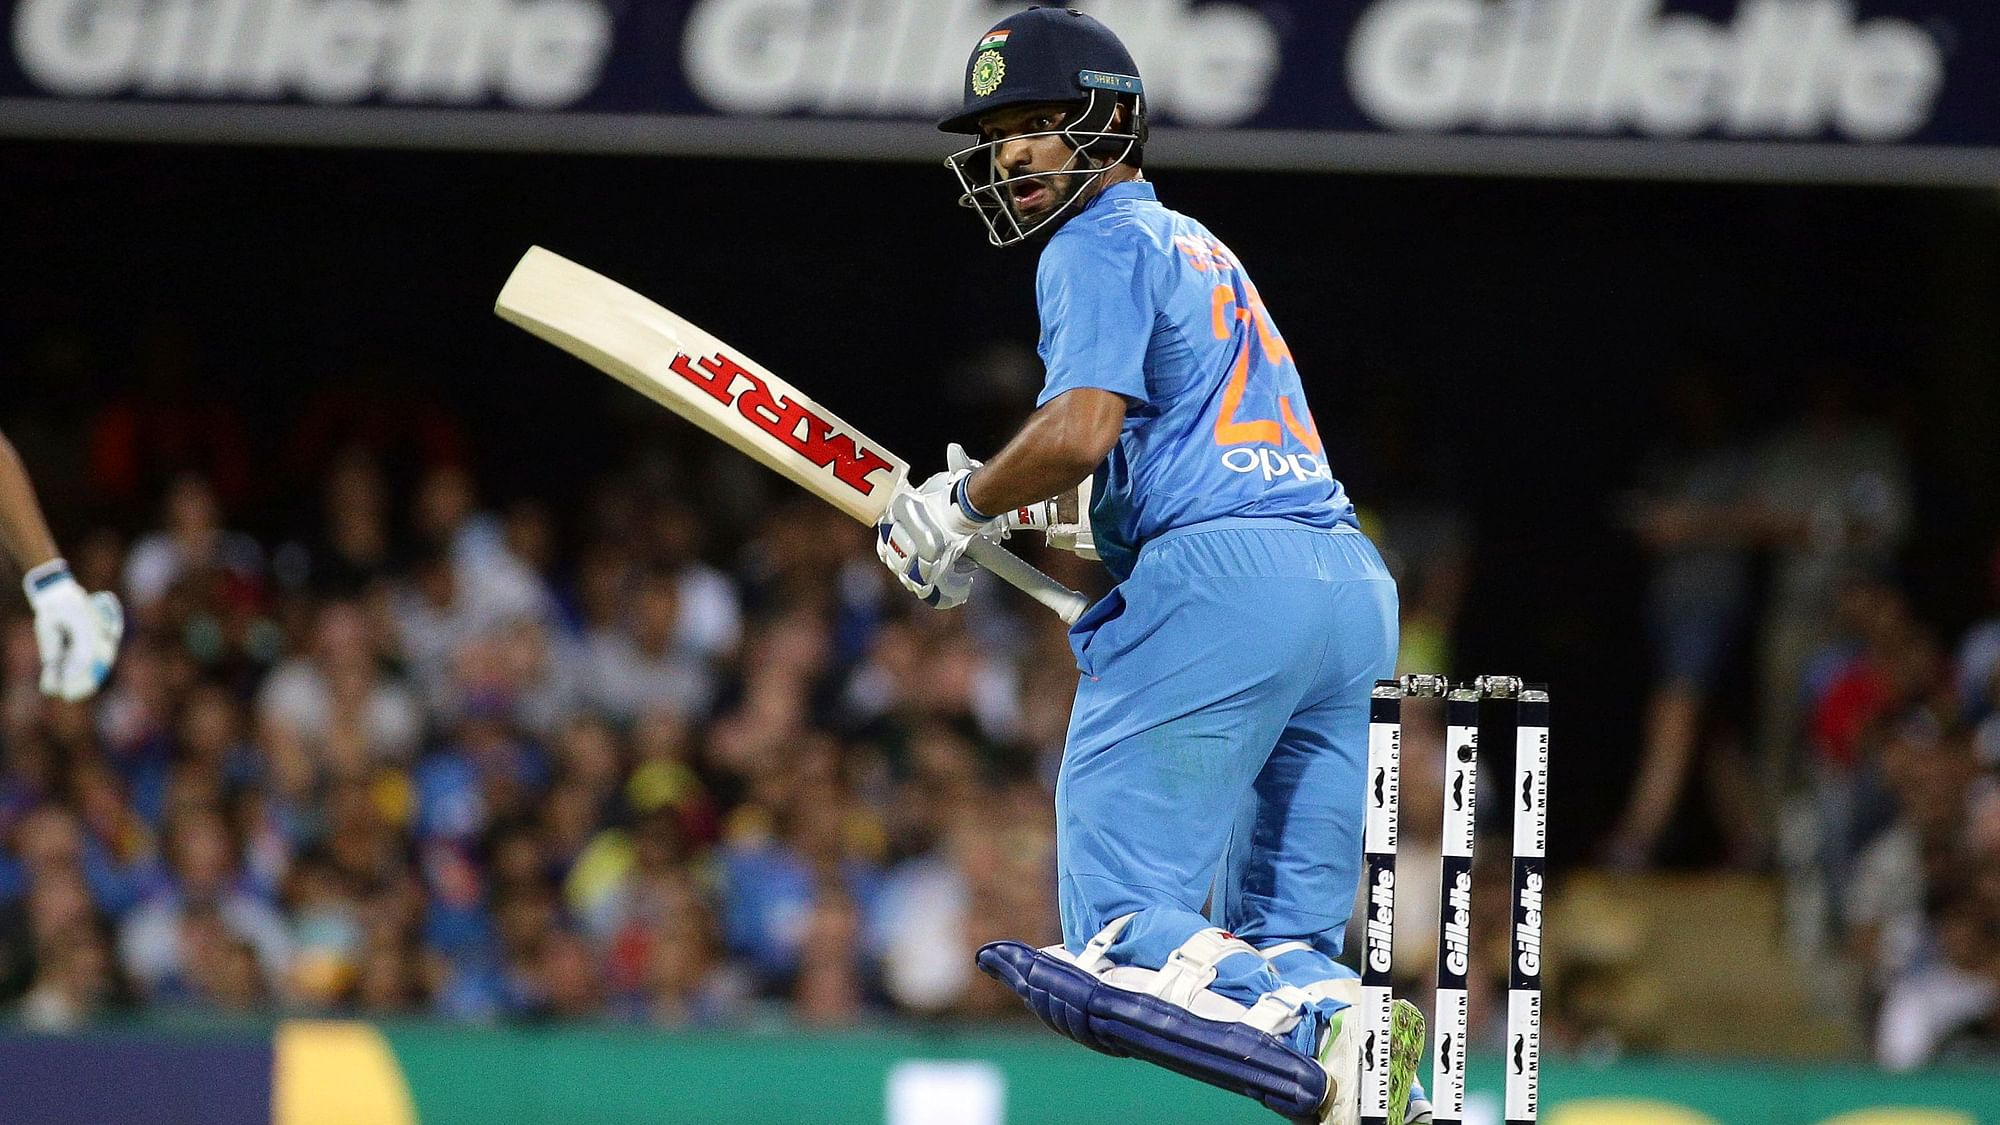 Shikhar Dhawan’s 42-ball 76 went in vain as India lost their T20I series opener vs Australia at Brisbane